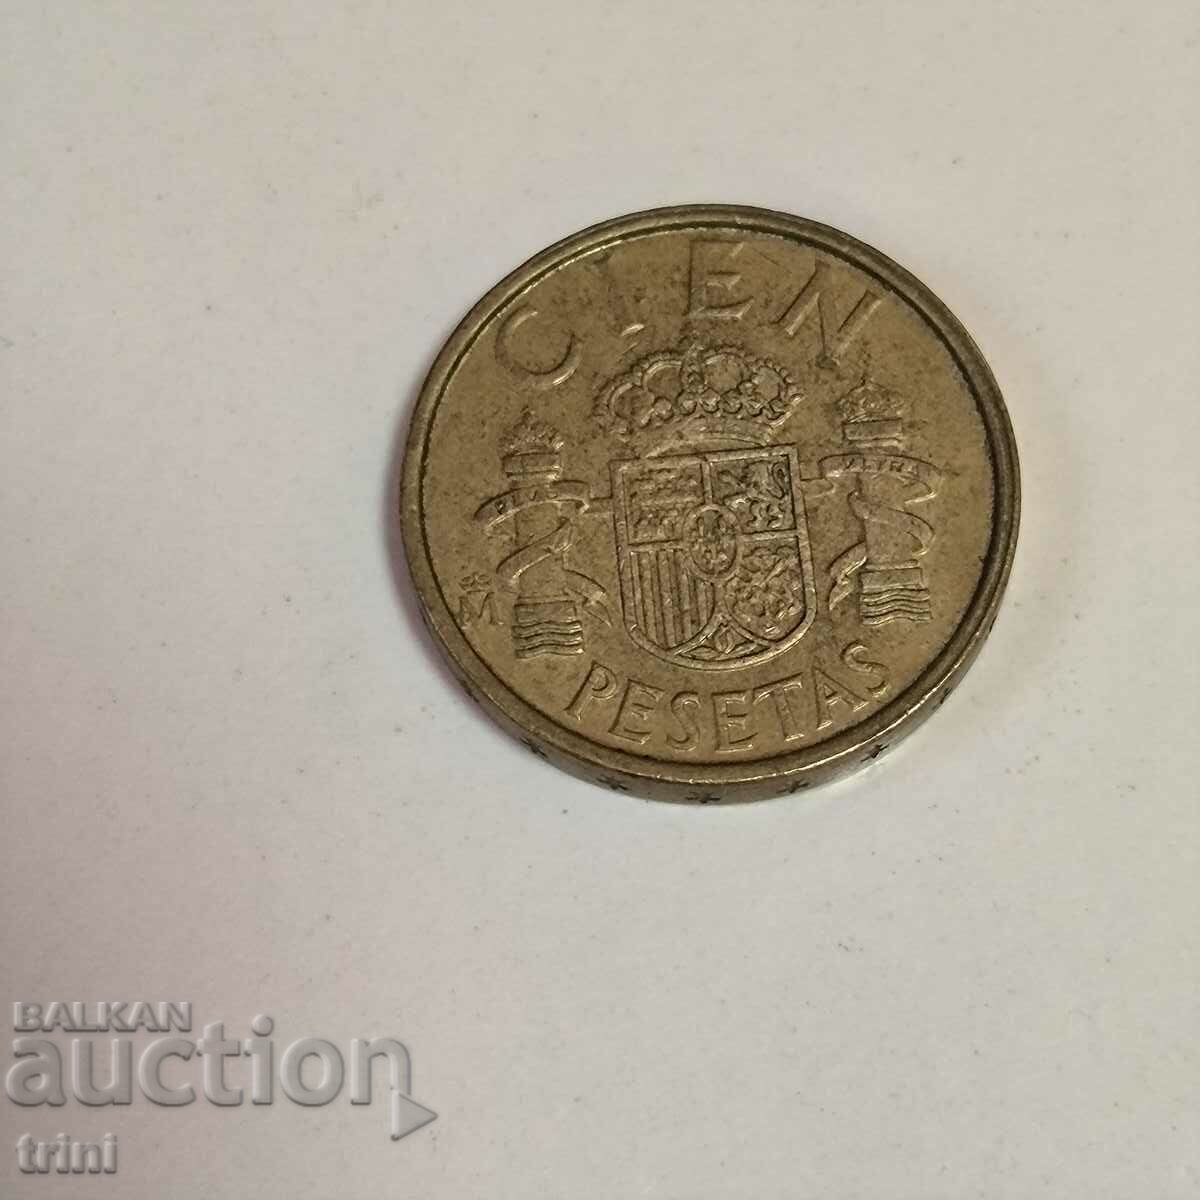 Spain 100 pesetas 1988 year g54